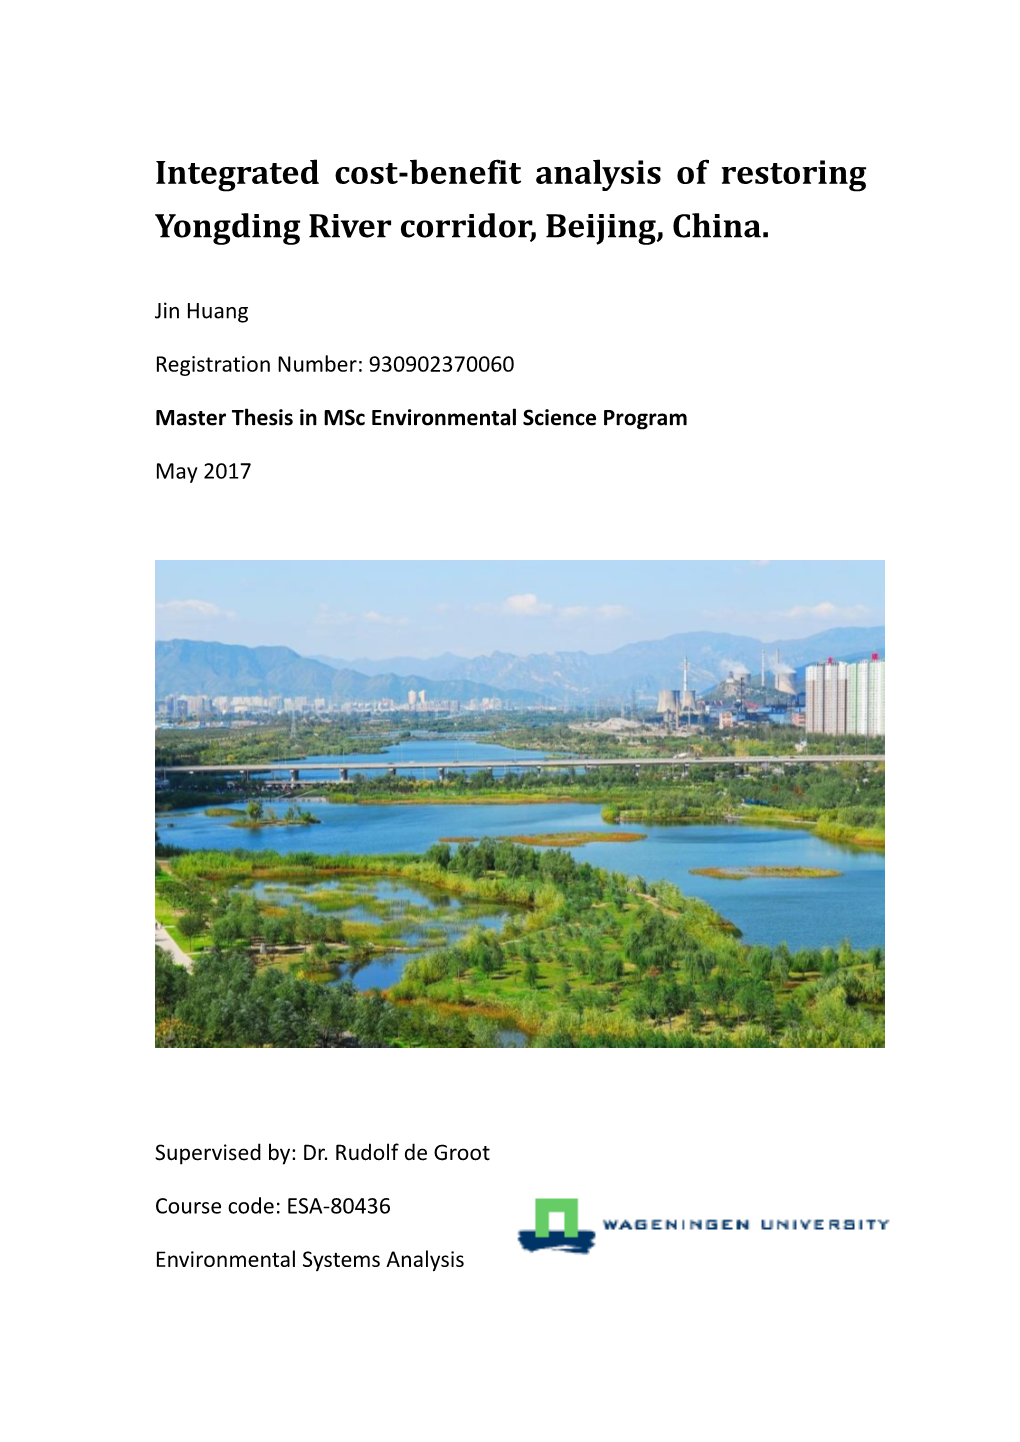 Integrated Cost-Benefit Analysis of Restoring Yongding River Corridor, Beijing, China